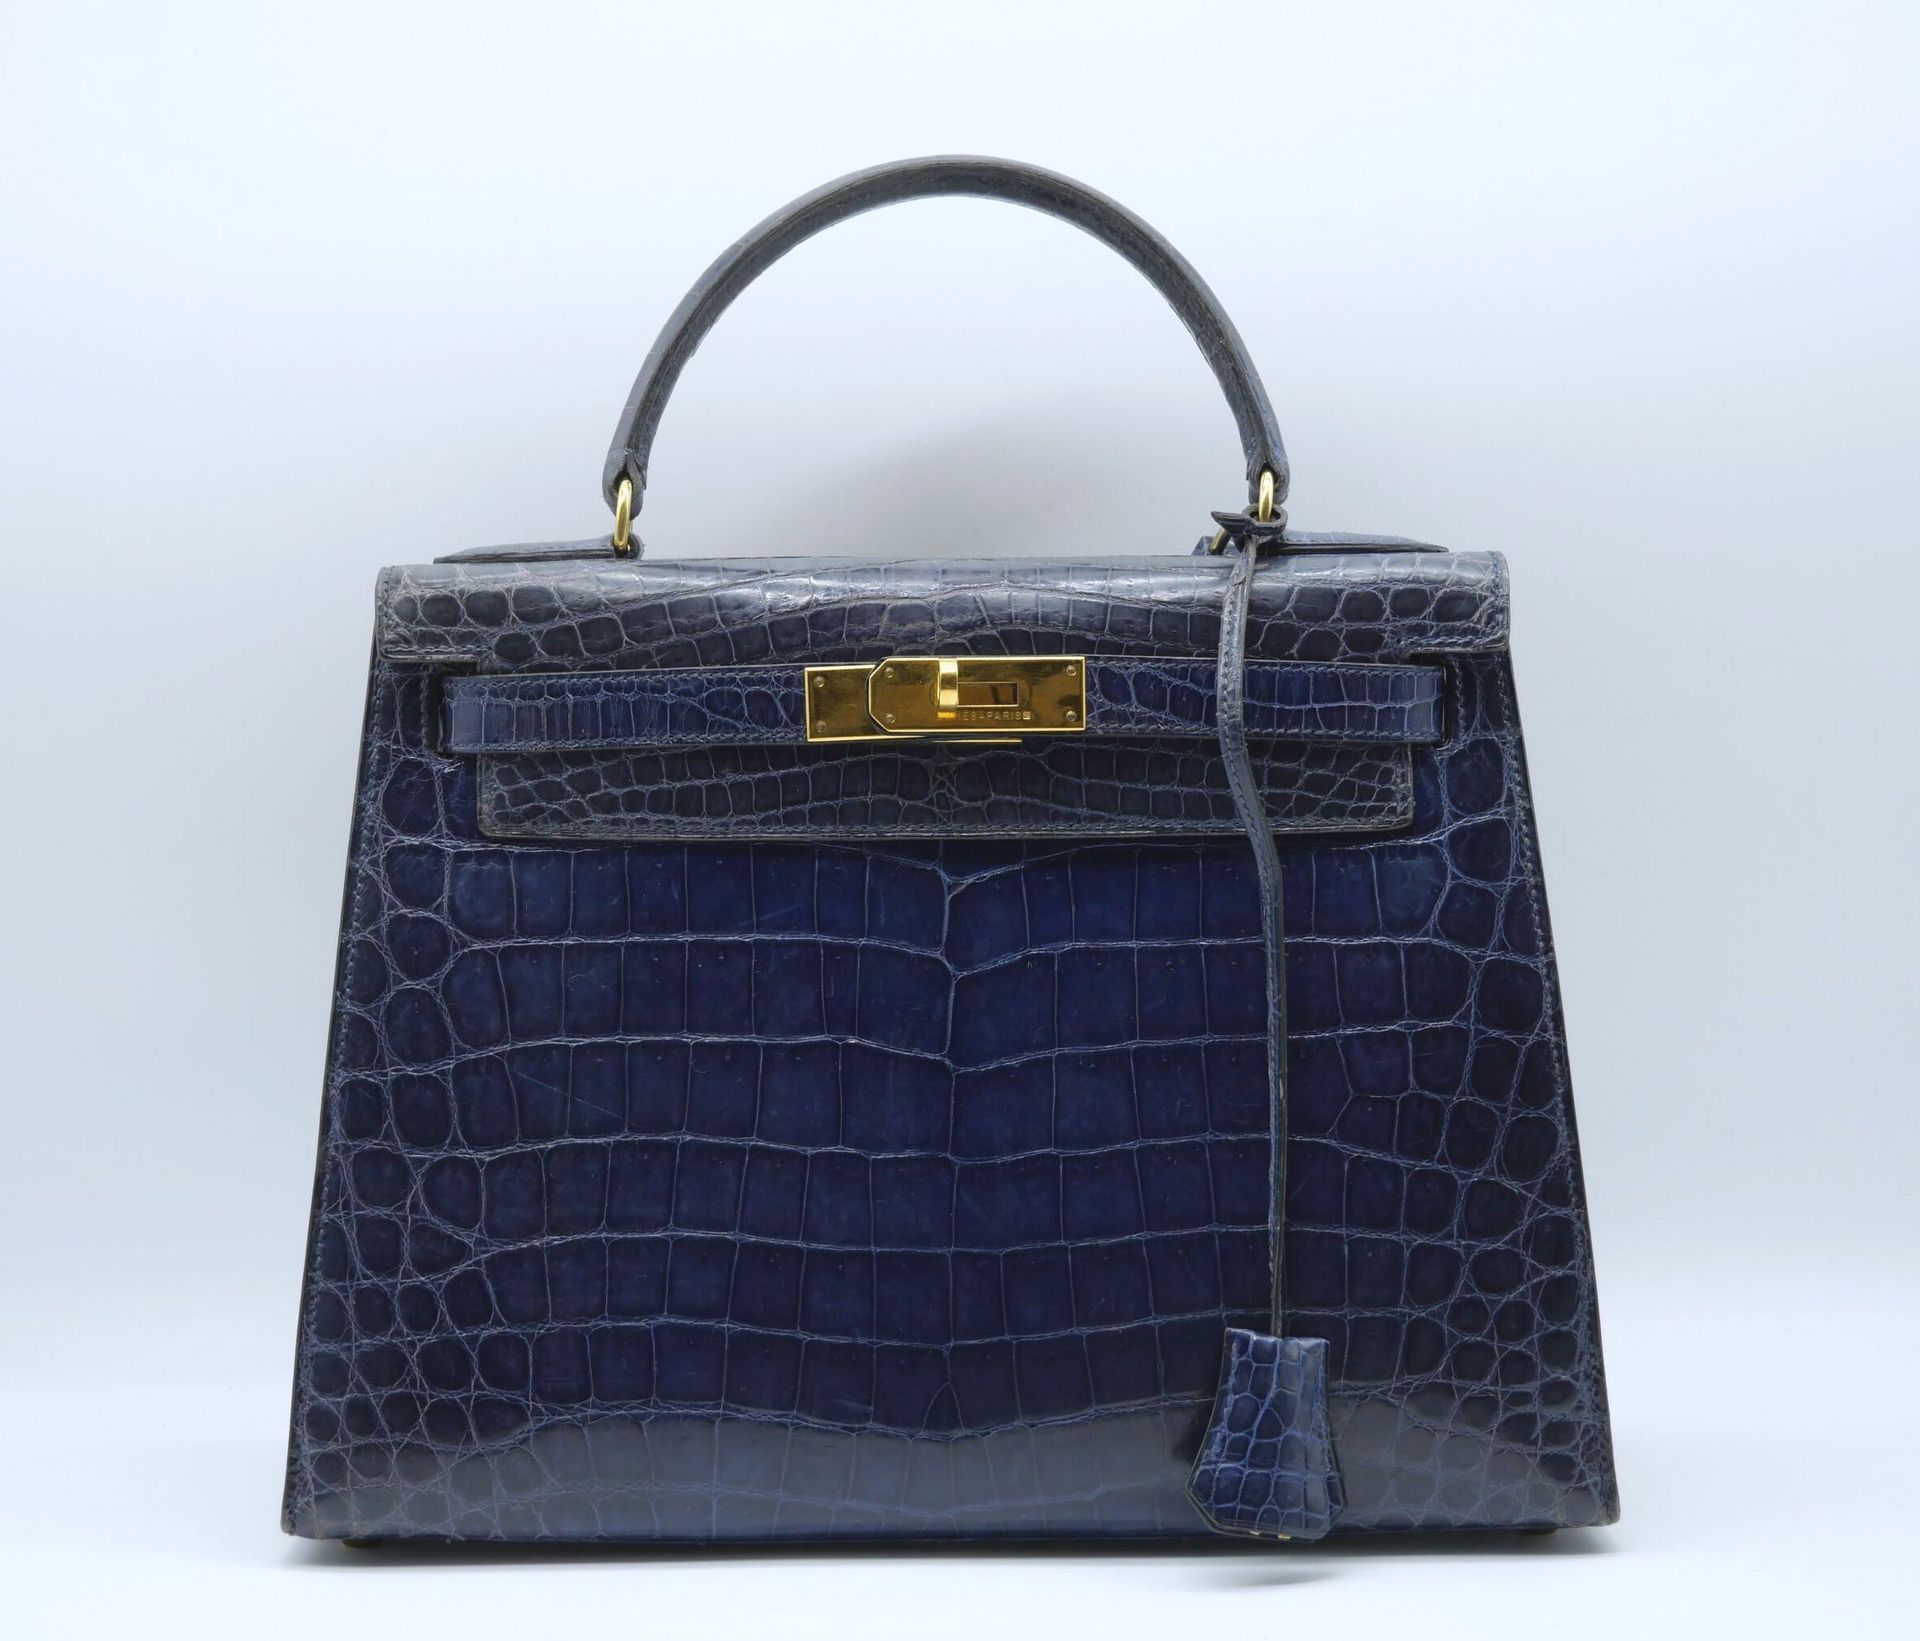 HERMES PARIS KELLY bag in navy blue crocodile, with pock…